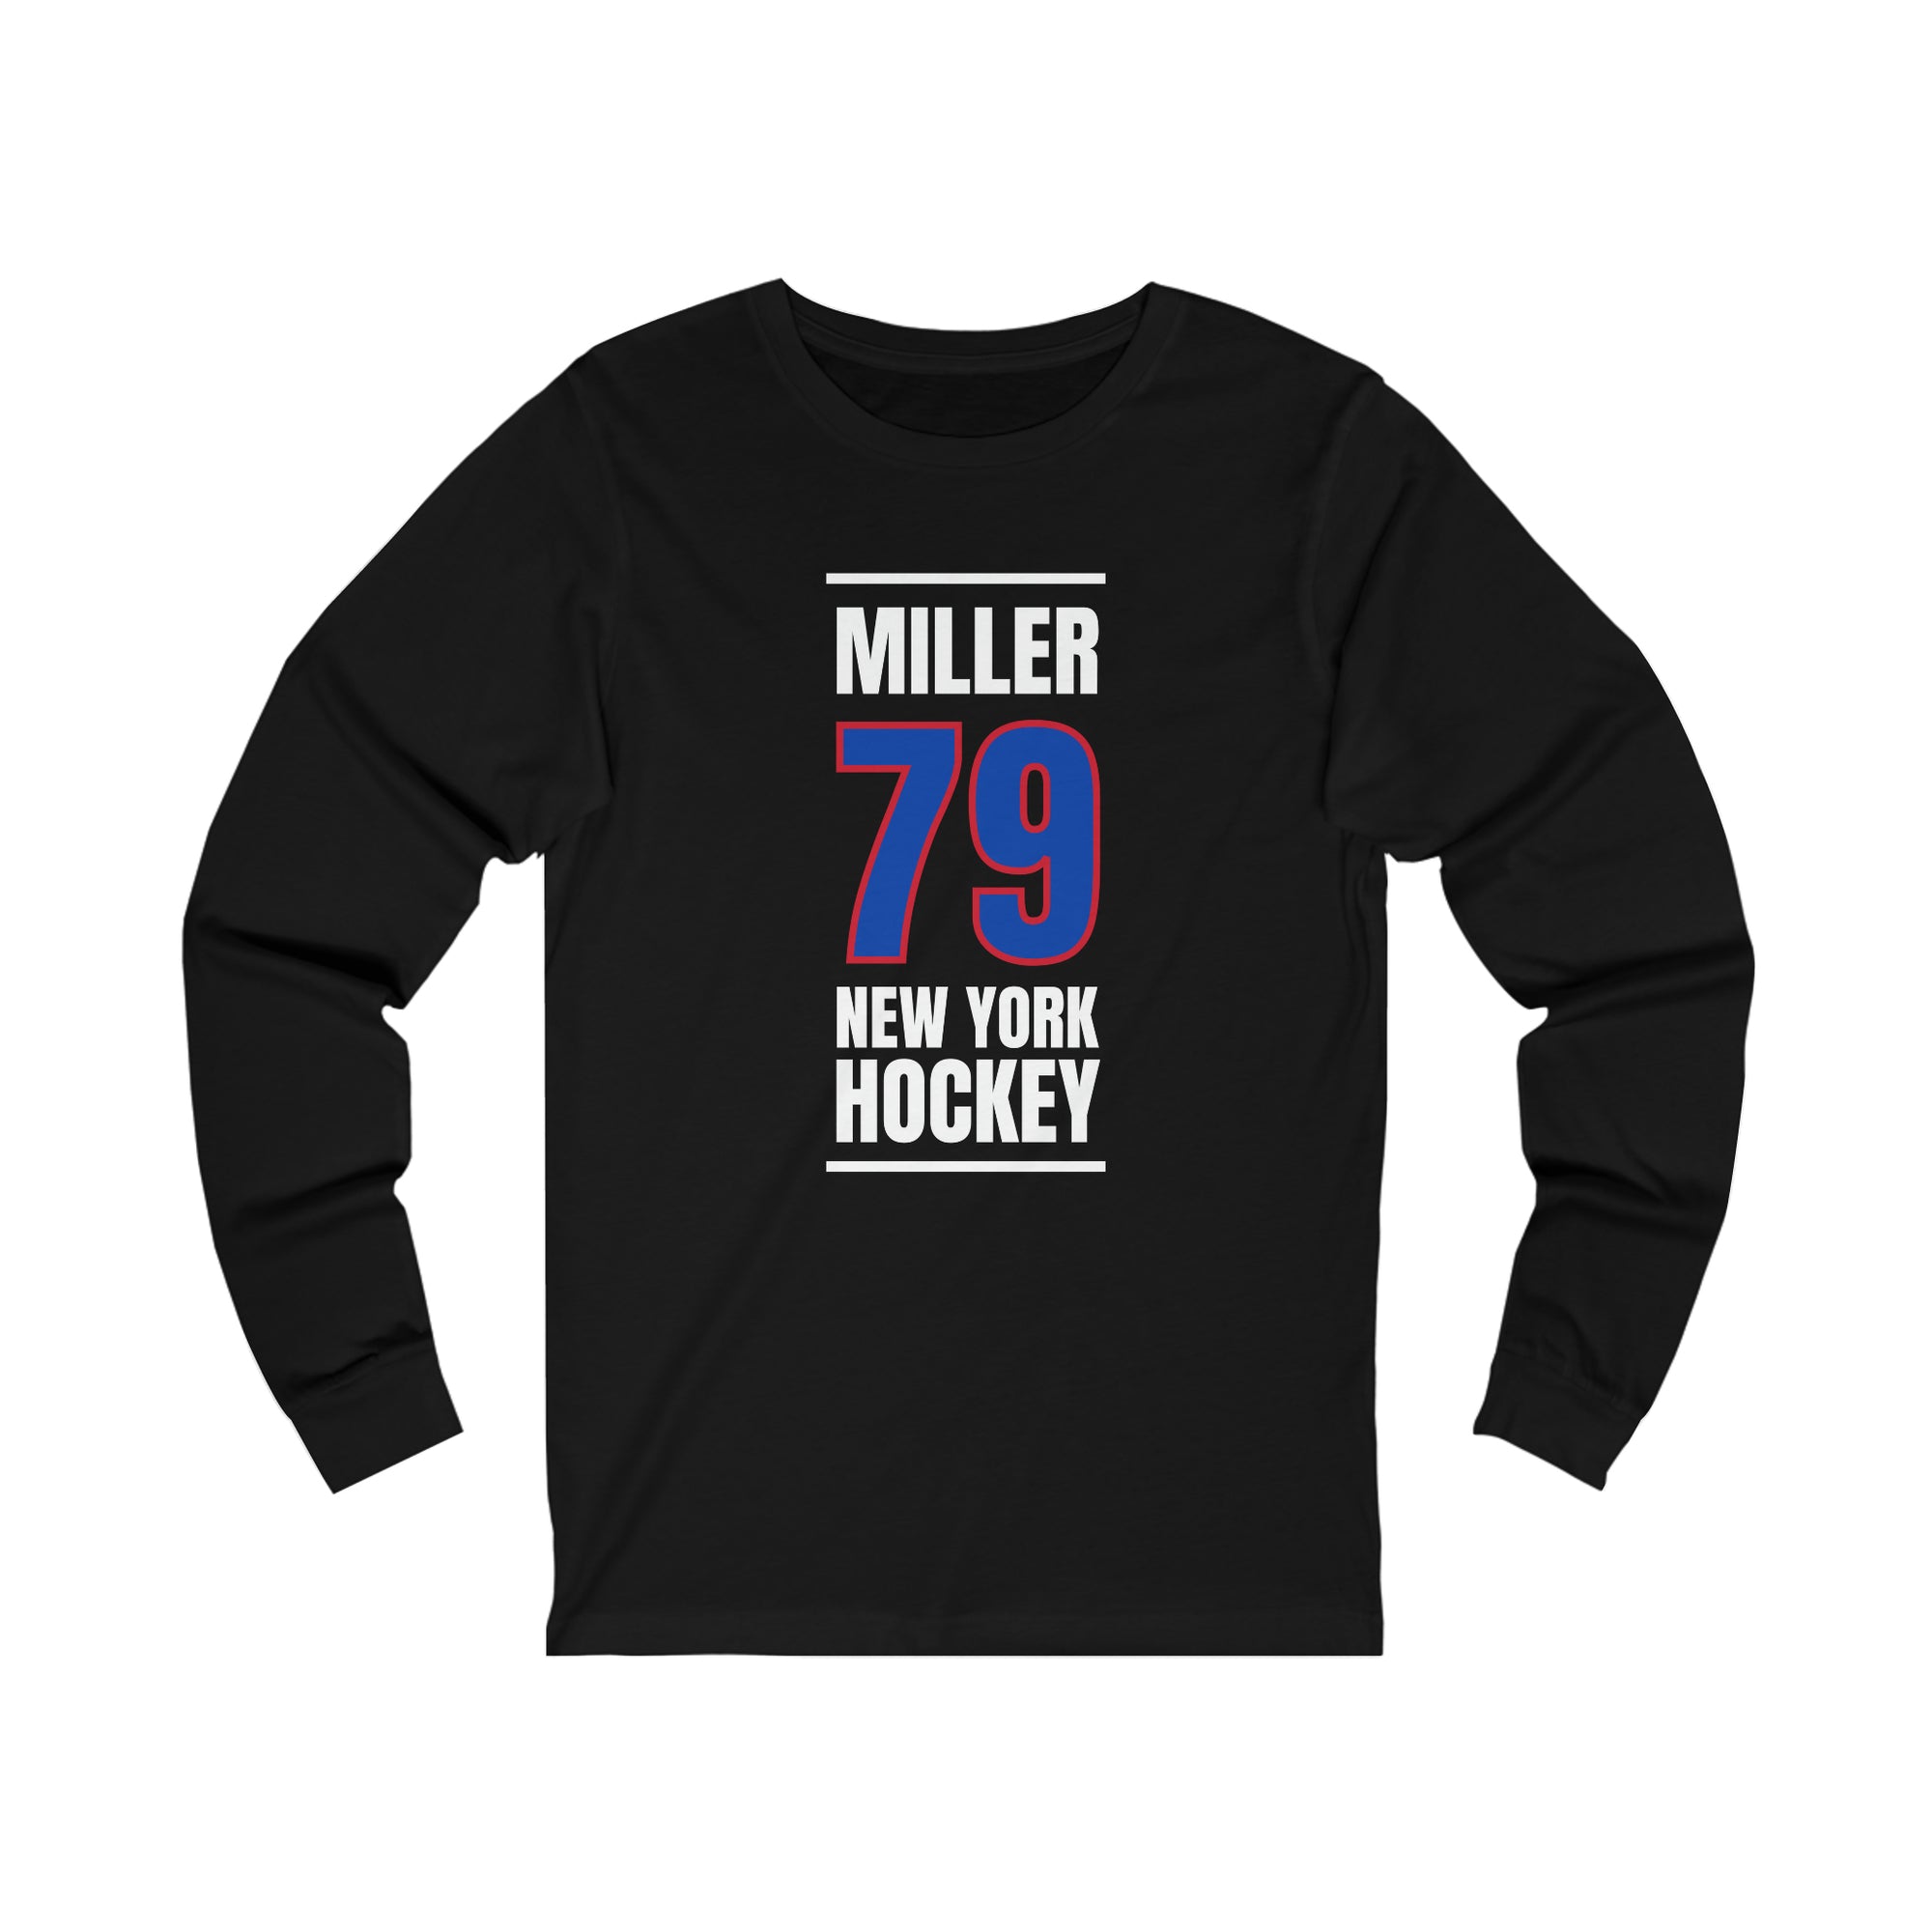 Miller 79 New York Hockey Royal Blue Vertical Design Unisex Jersey Long Sleeve Shirt